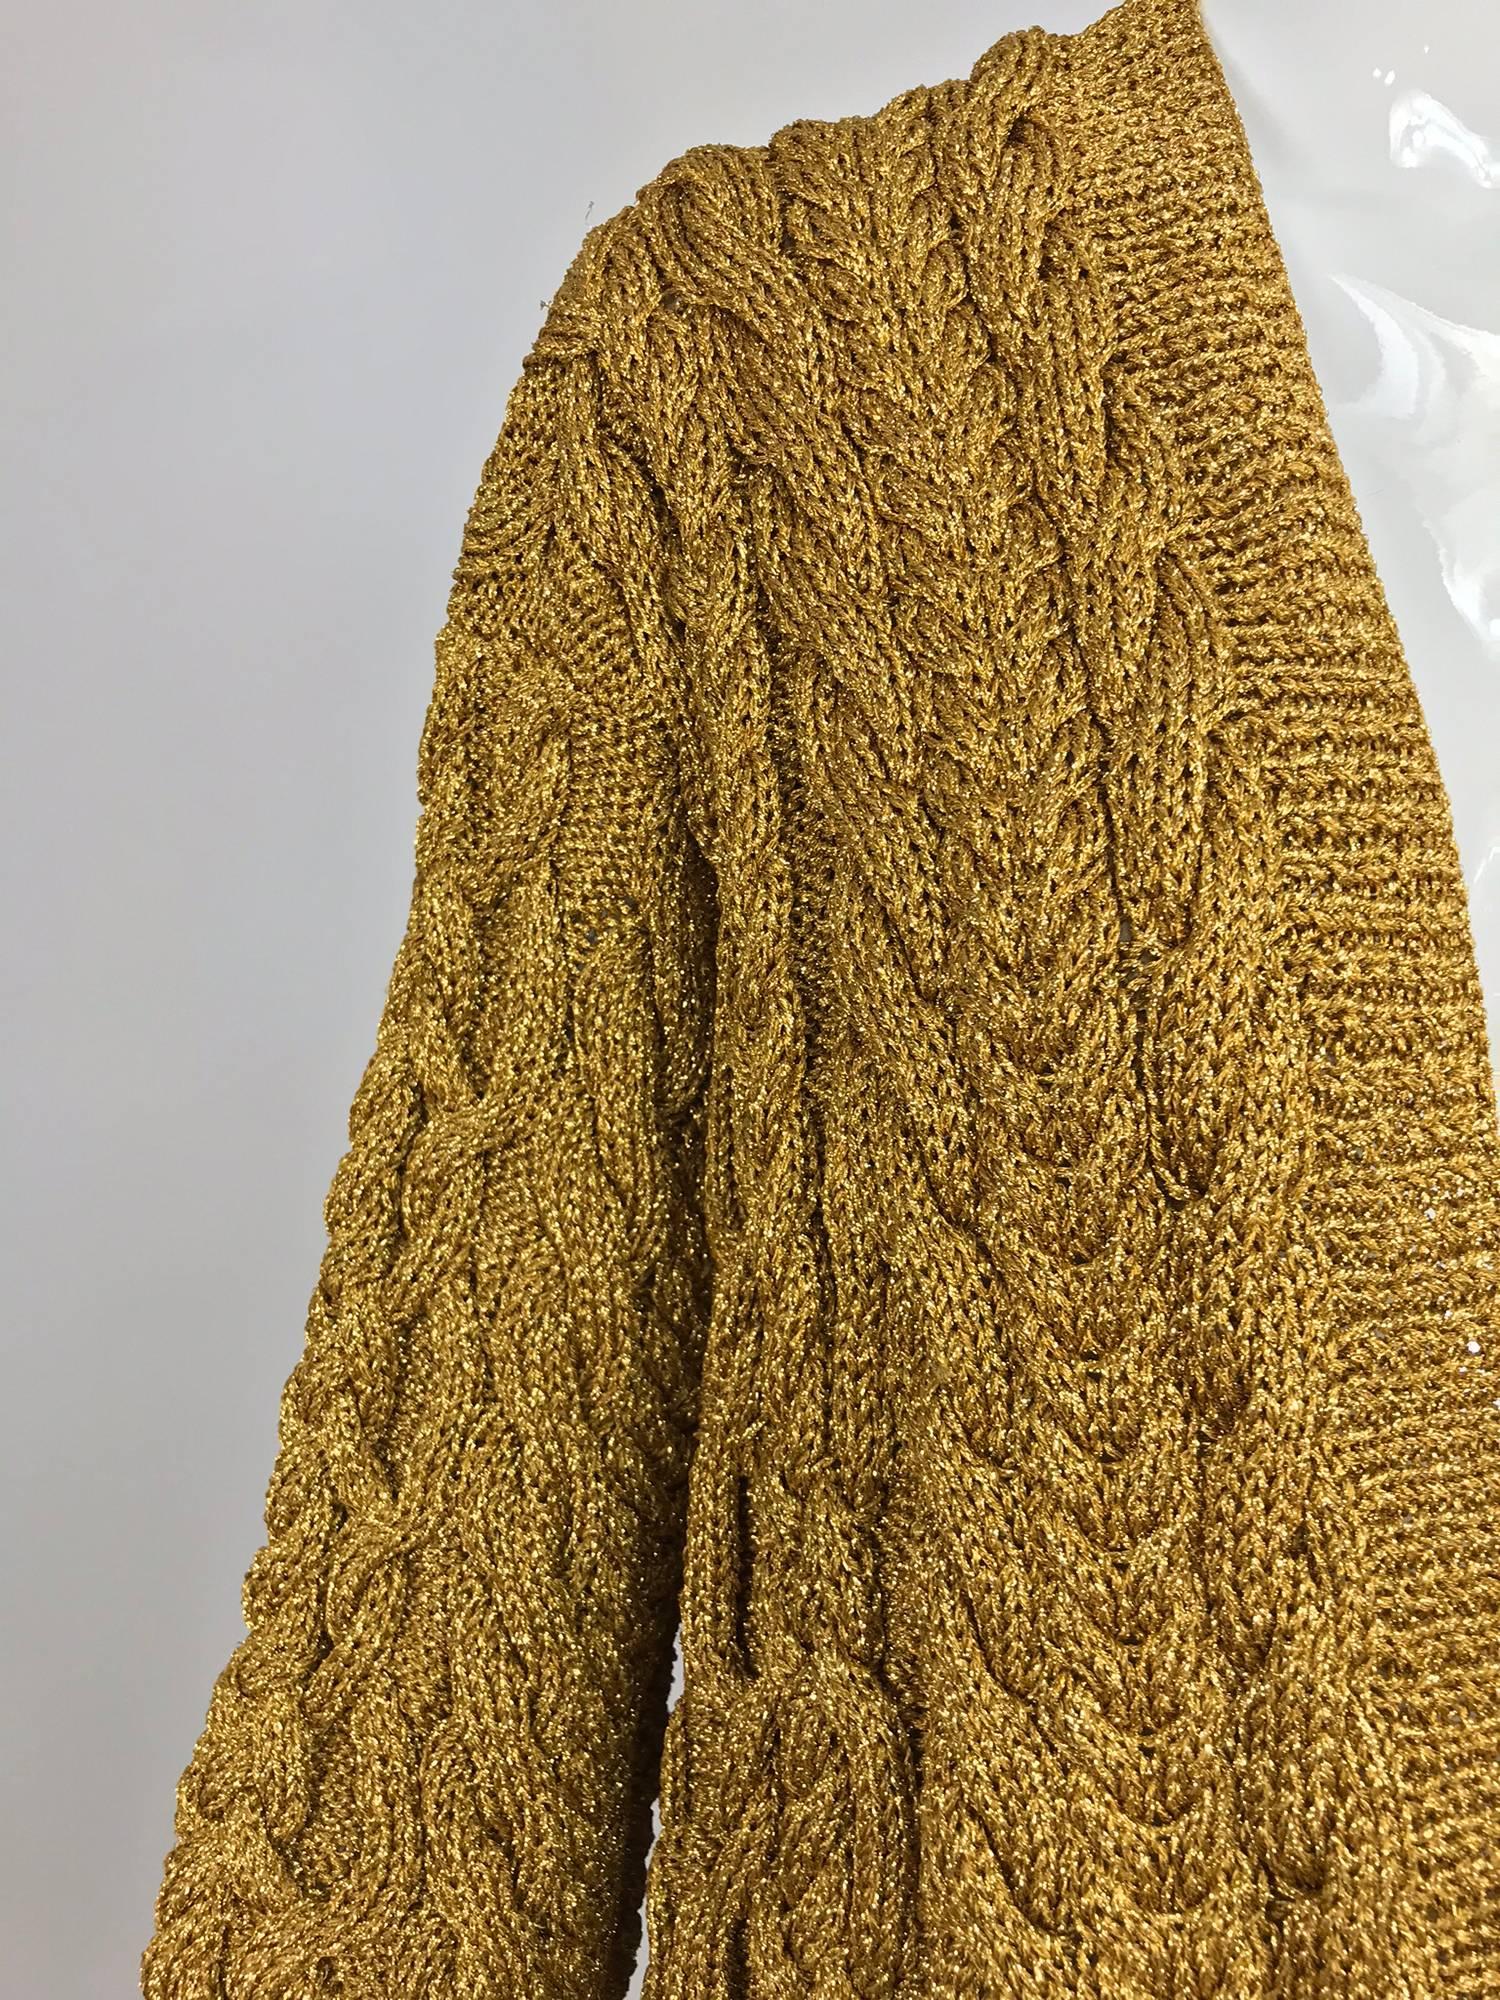 Anne Klein chunky gold metallic knit cardigan sweater 1990s 6